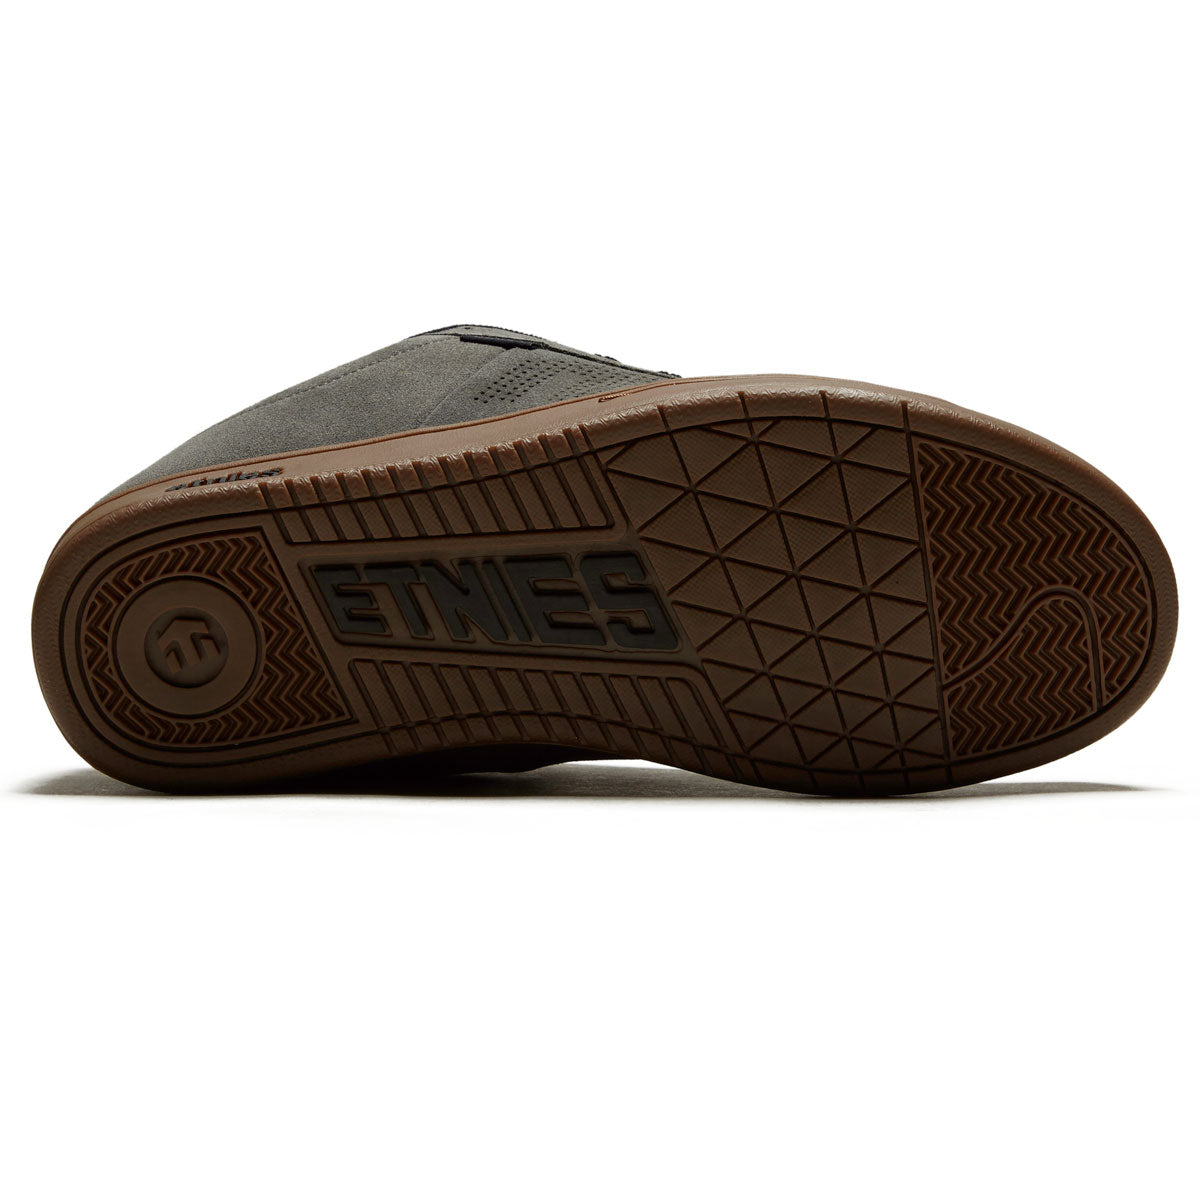 Etnies Kingpin Shoes - Grey/Black/Gum image 4